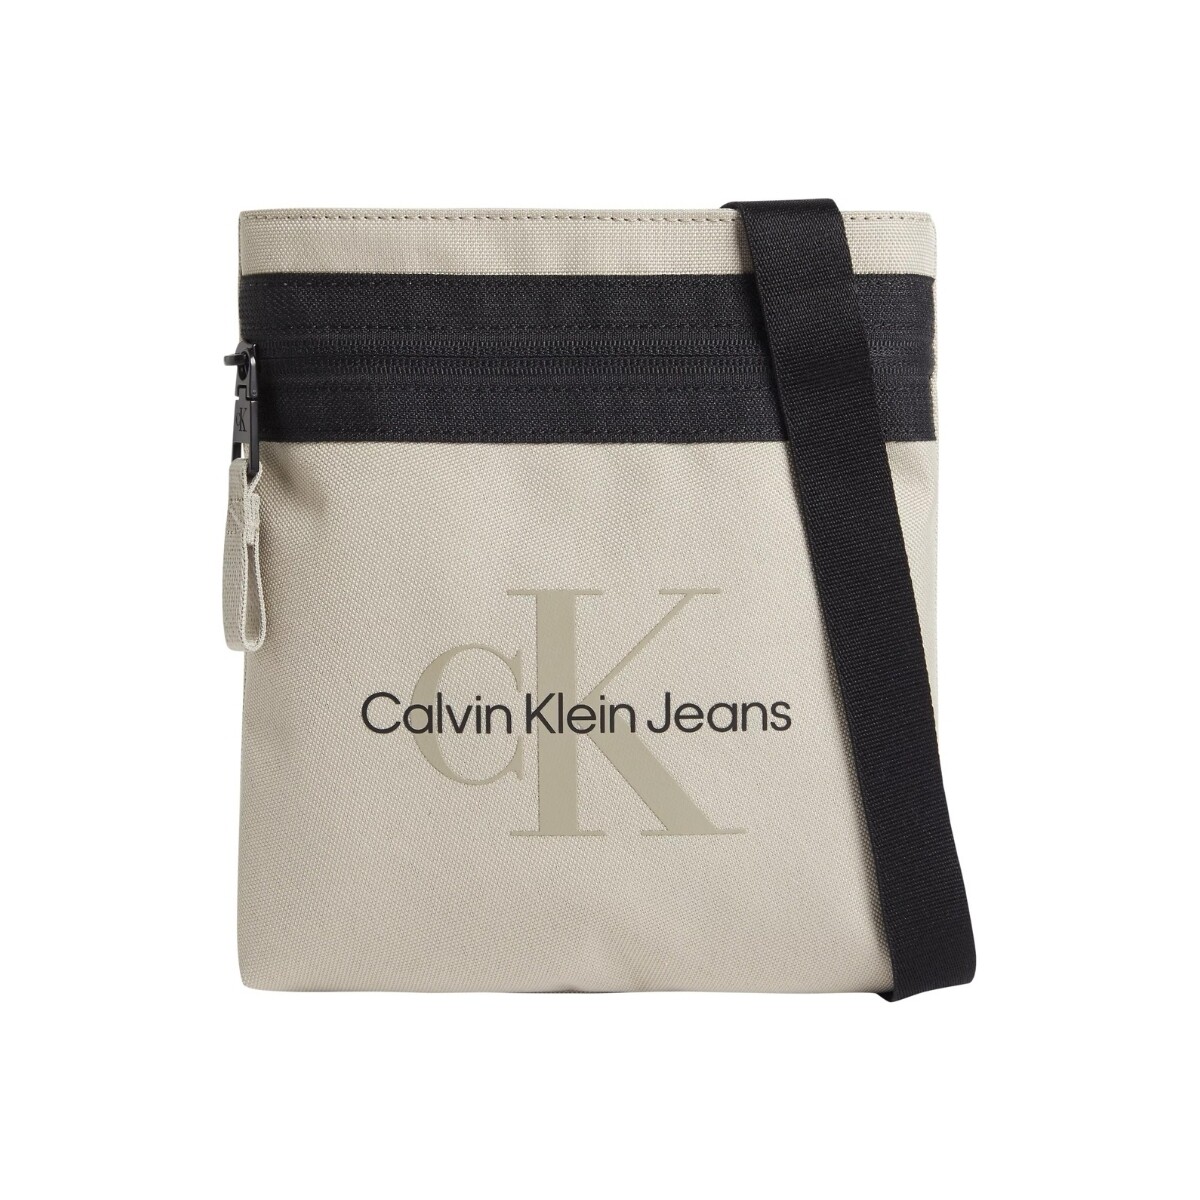 Sacs Pochettes / Sacoches Calvin Klein Jeans Sacoche bandouliere  Ref 60813 P Beige